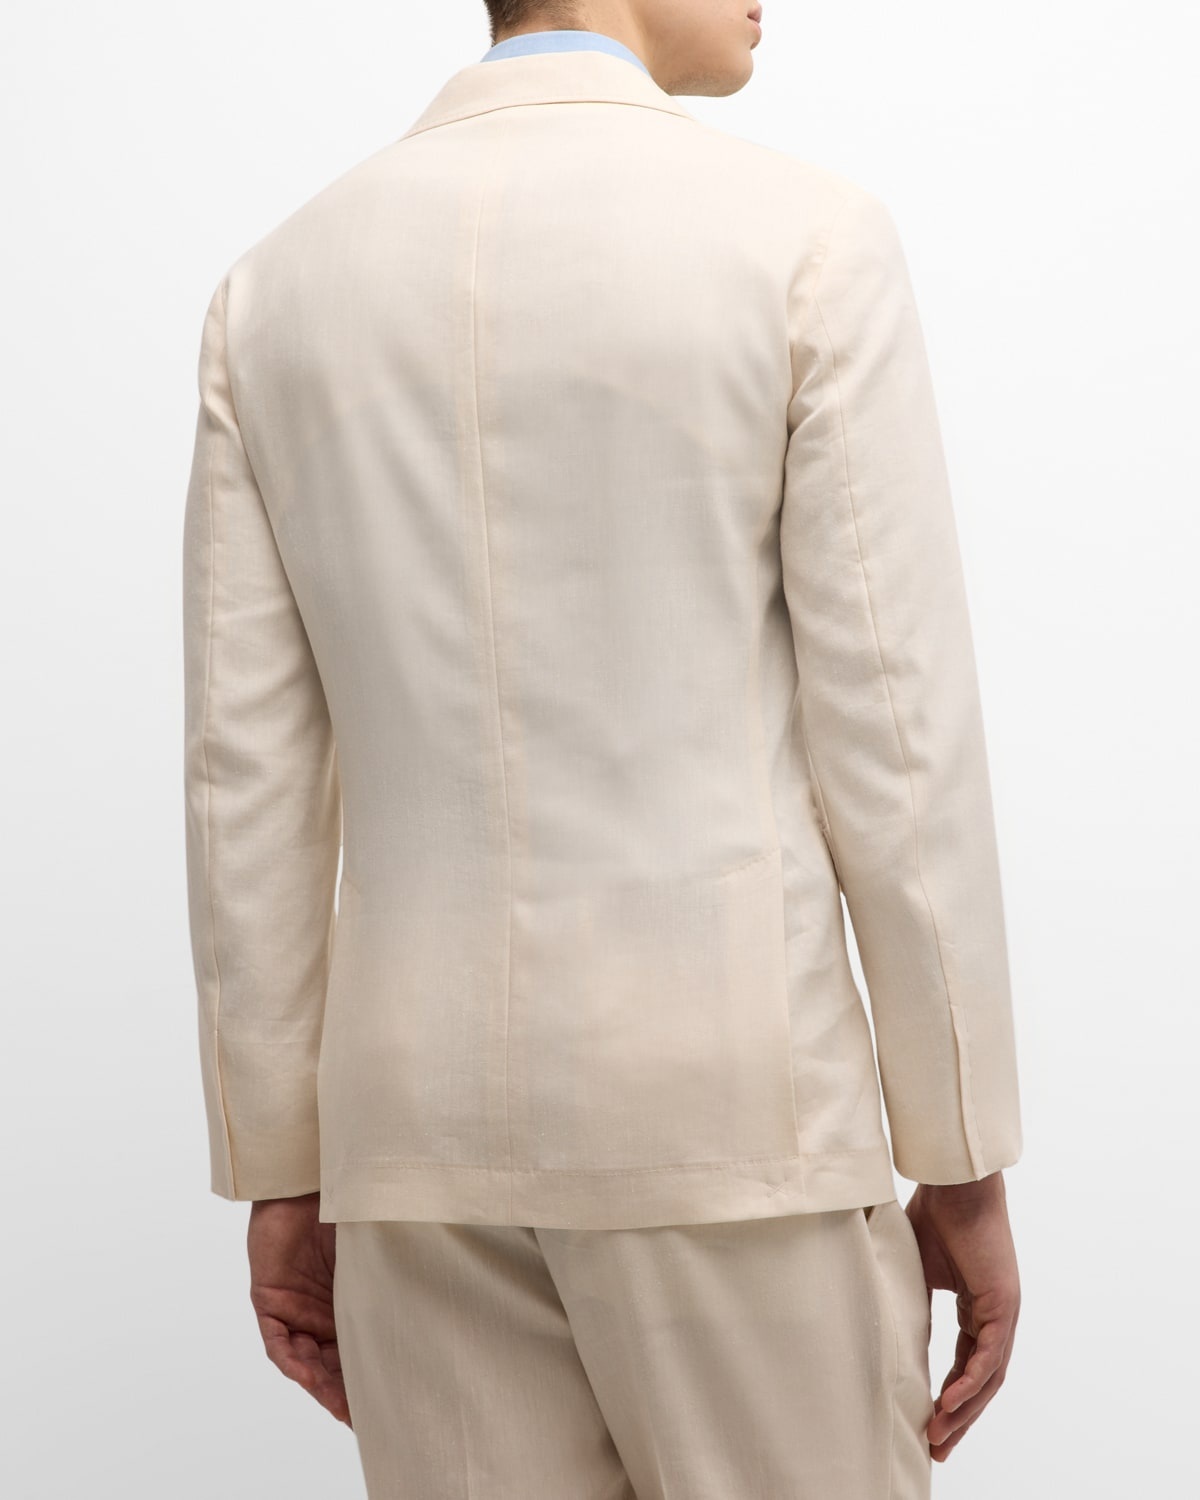 Men's Linen and Wool Solid Suit - 5